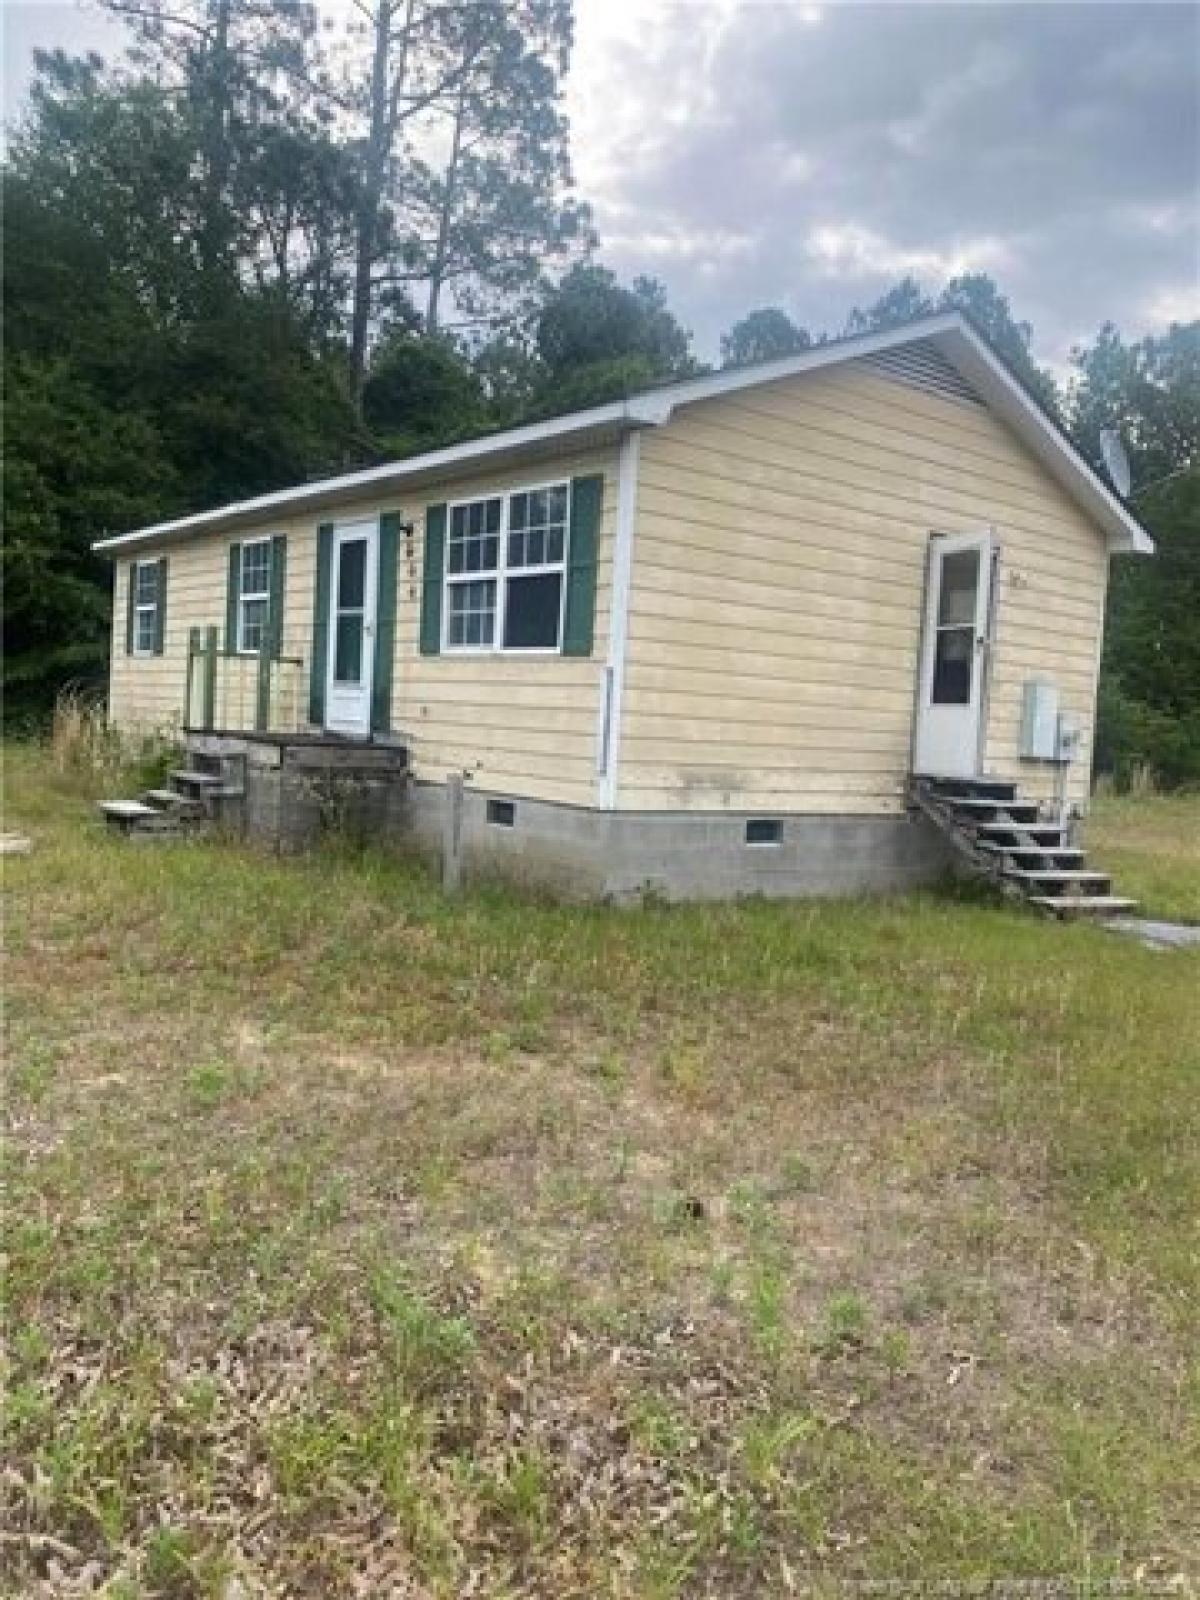 Picture of Home For Sale in White Oak, North Carolina, United States